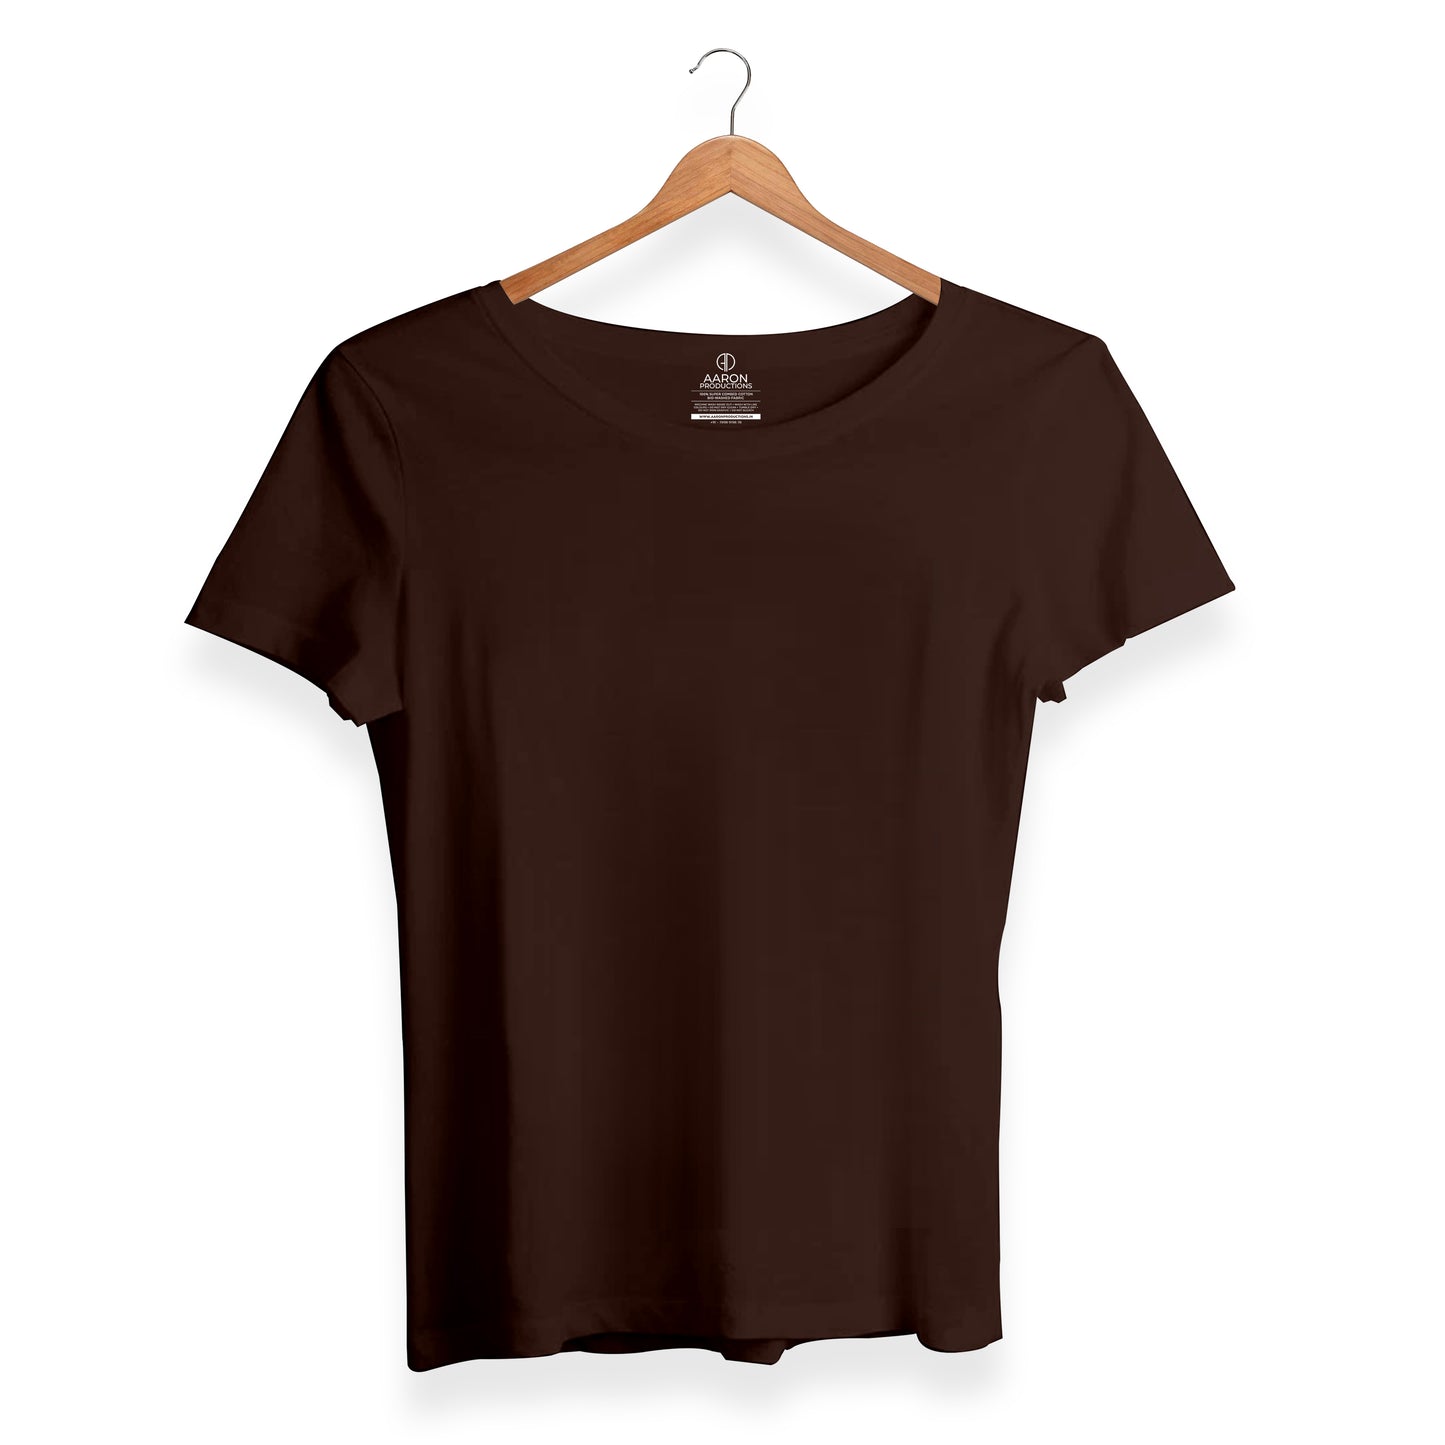 Coffee Brown - Plain T-shirt Women